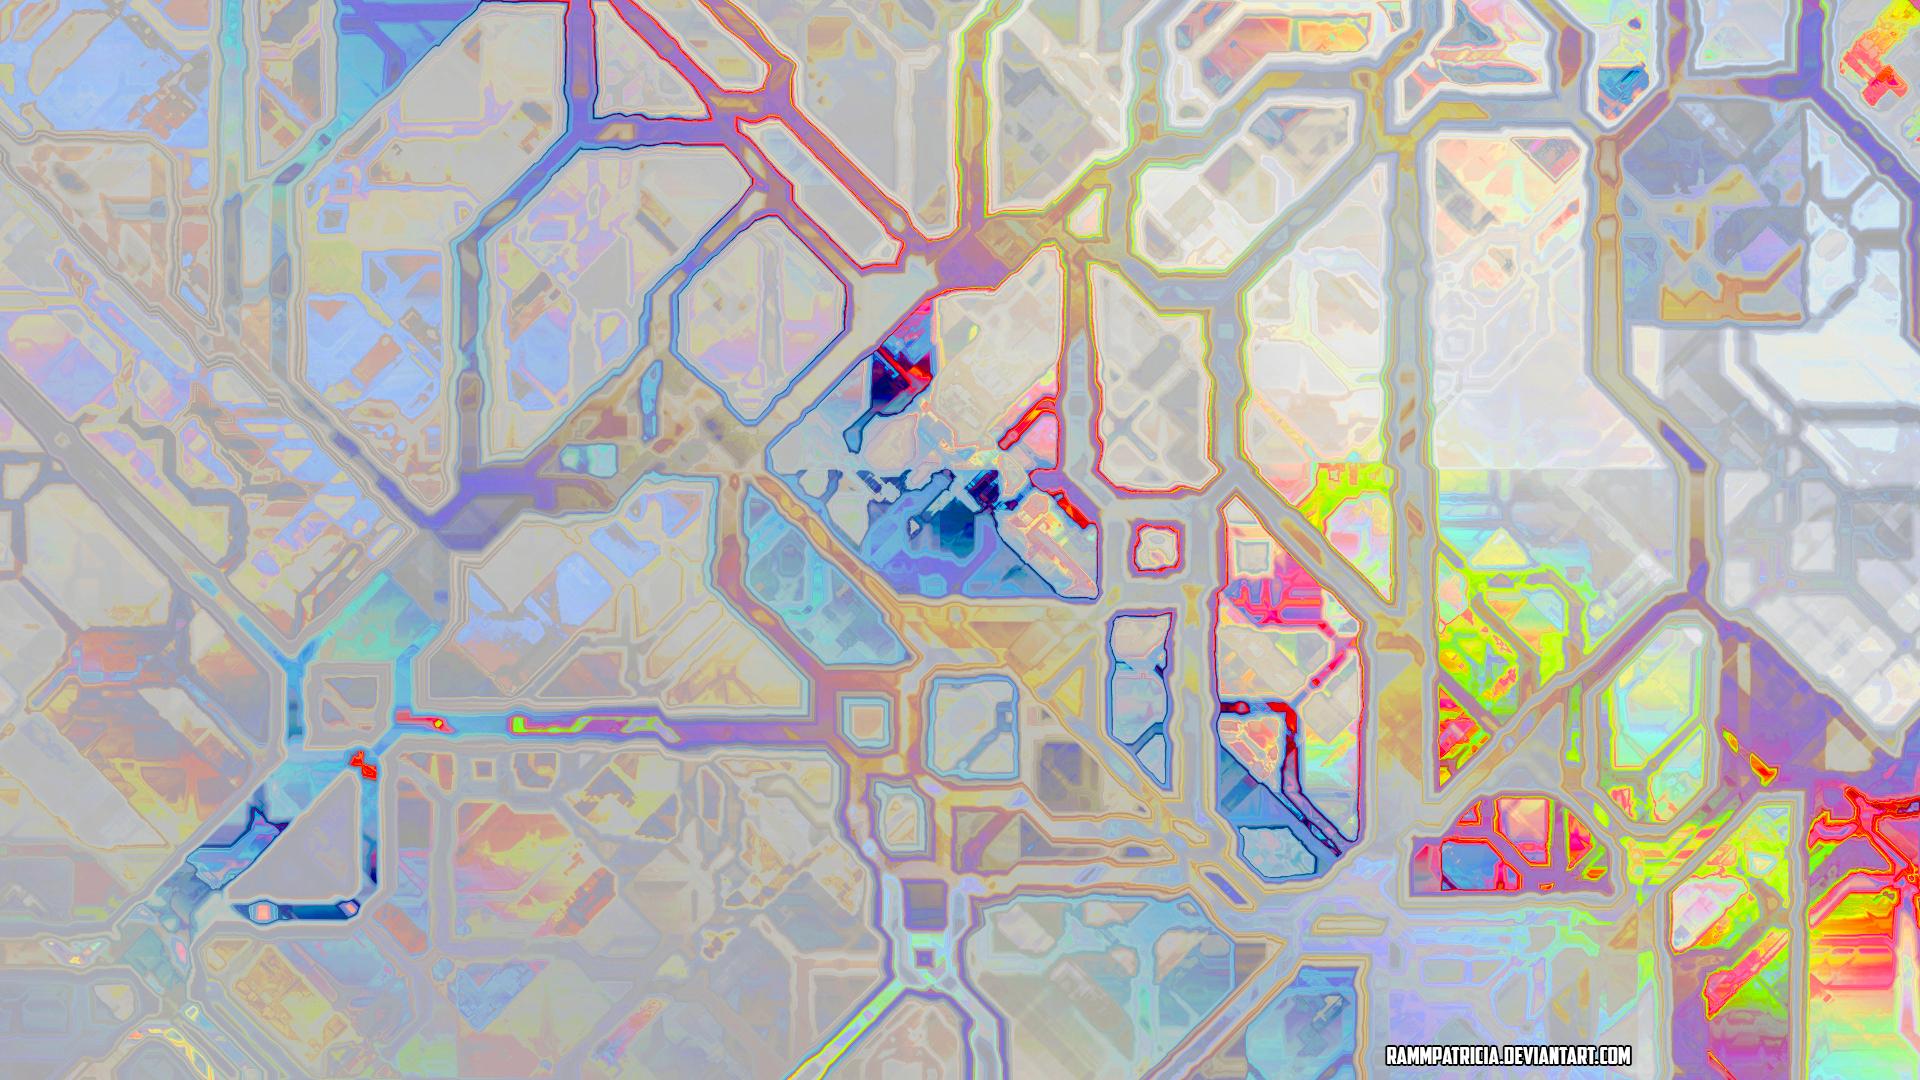 RammPatricia Abstract Digital Digital Art Colorful Watermarked 1920x1080